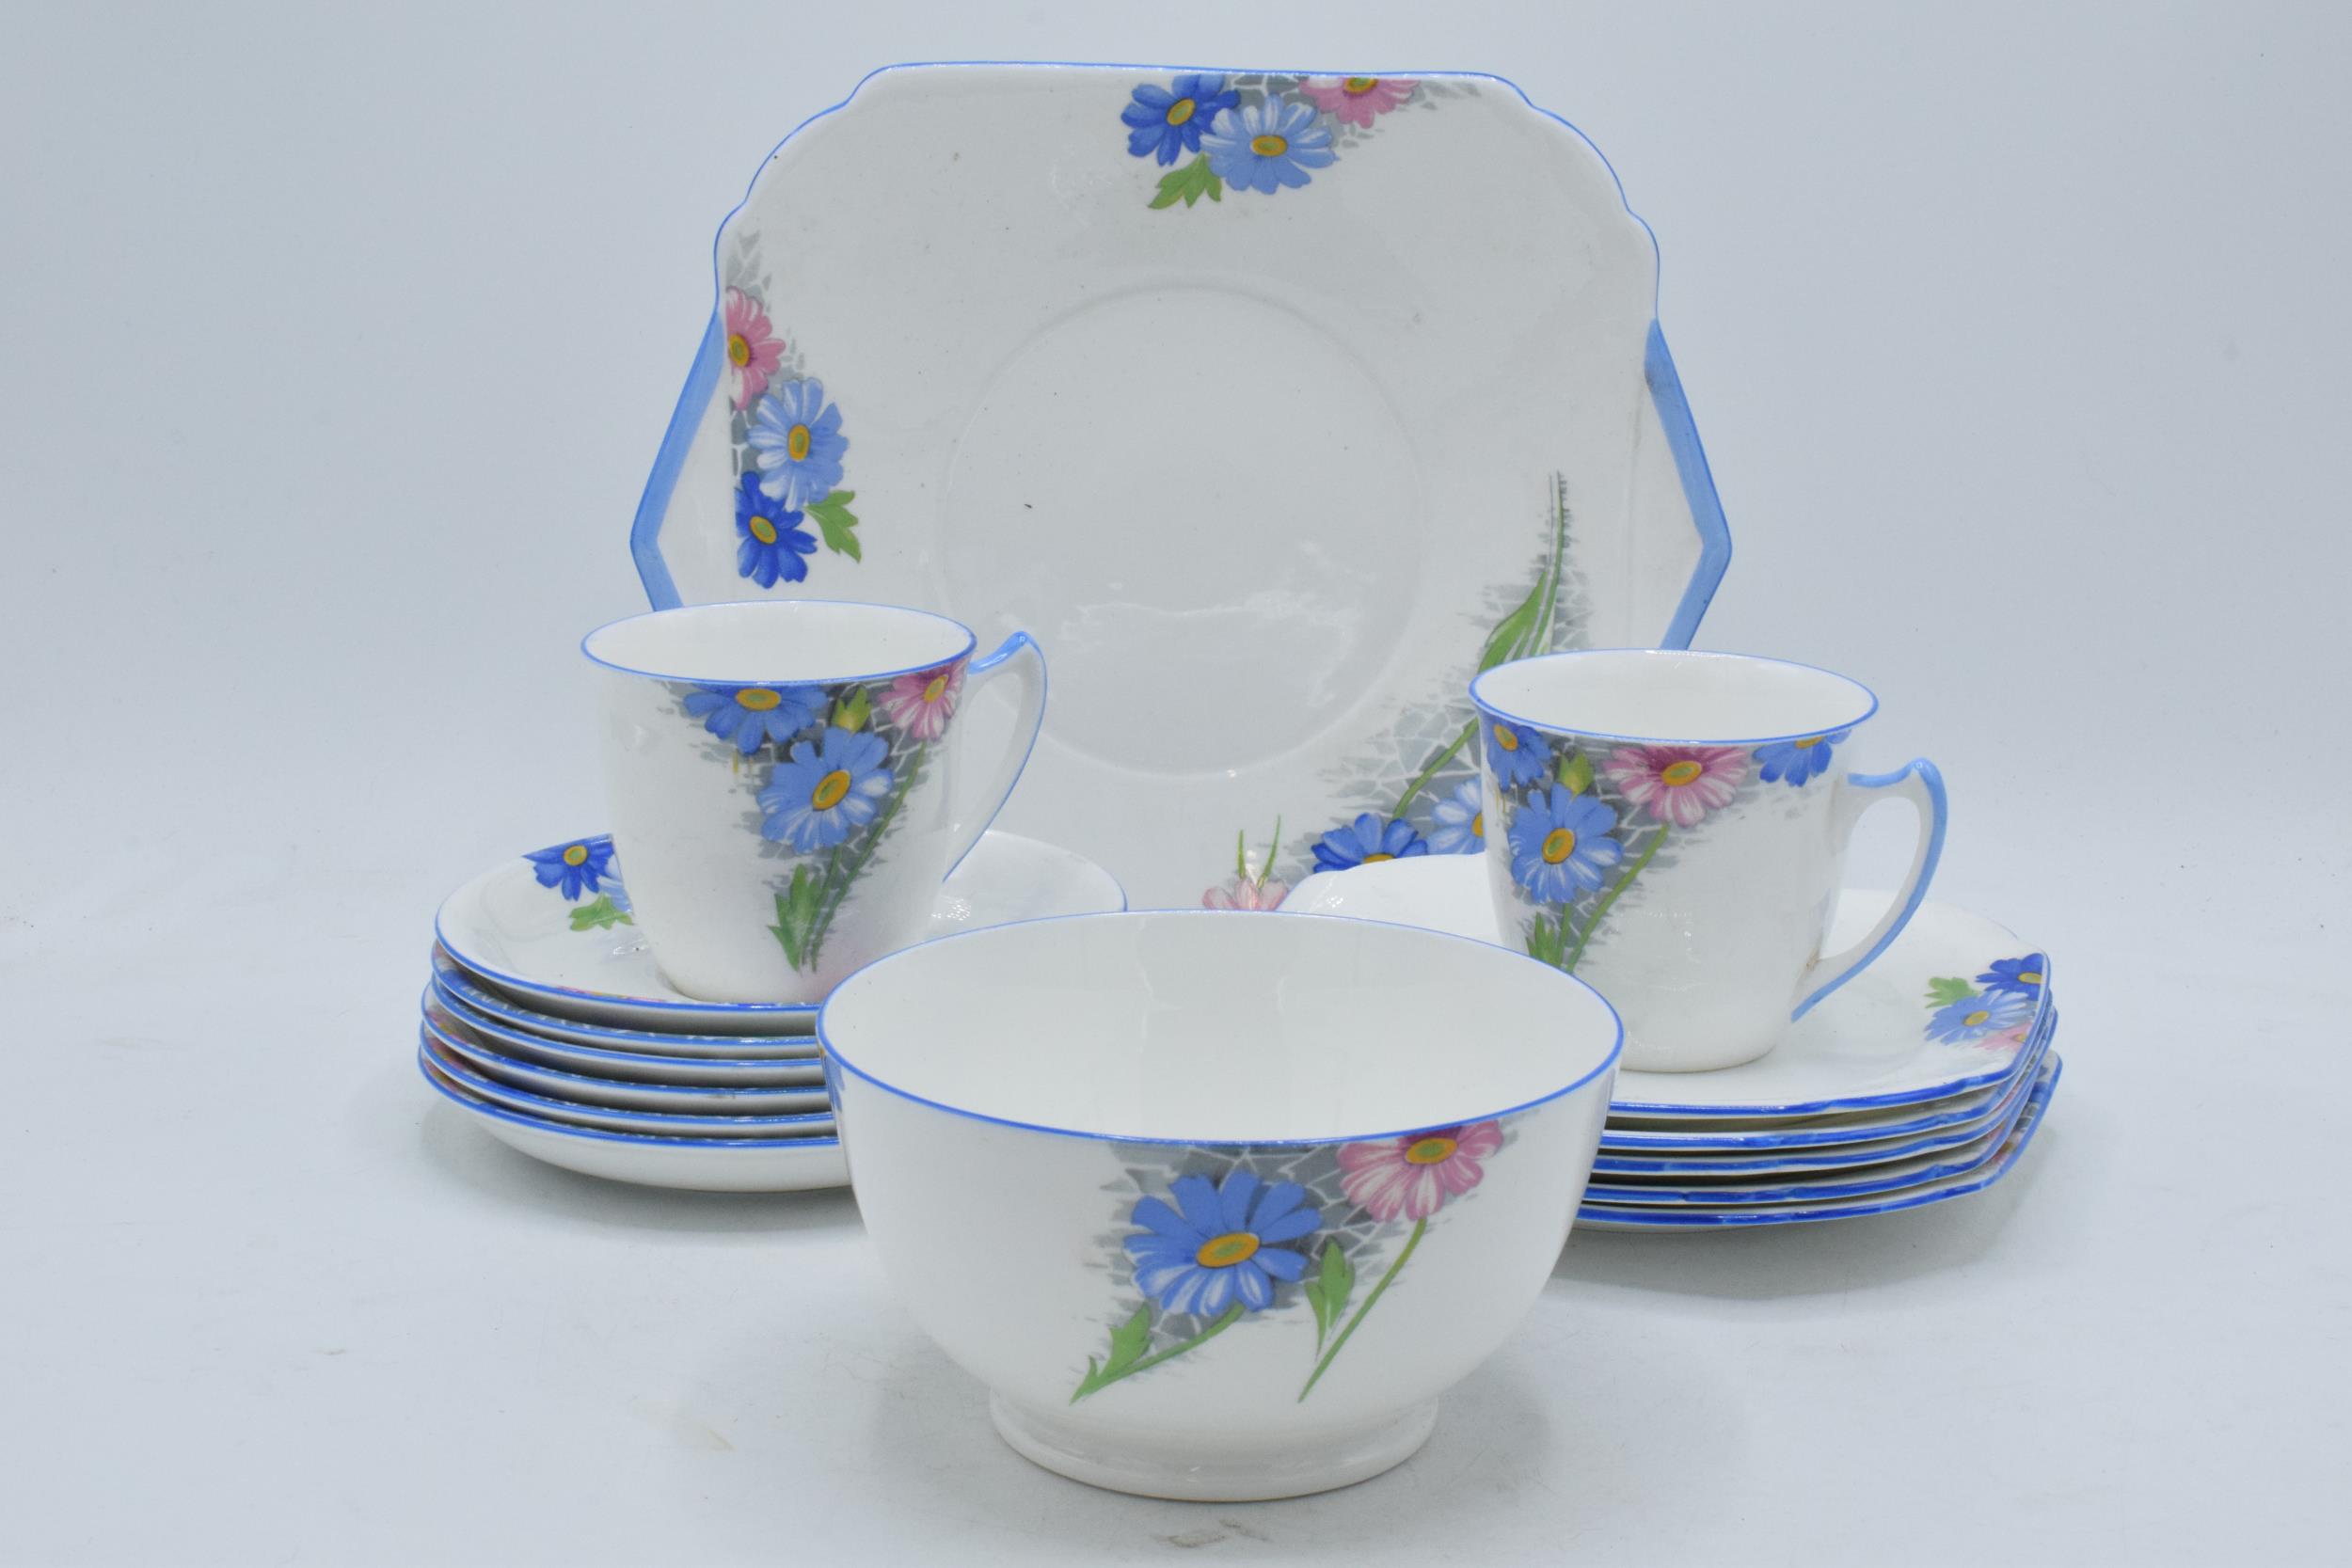 Shelley Strand shaped tea set pattern 12216 to include a cake plate, 6 saucers, 5 side plates, 2